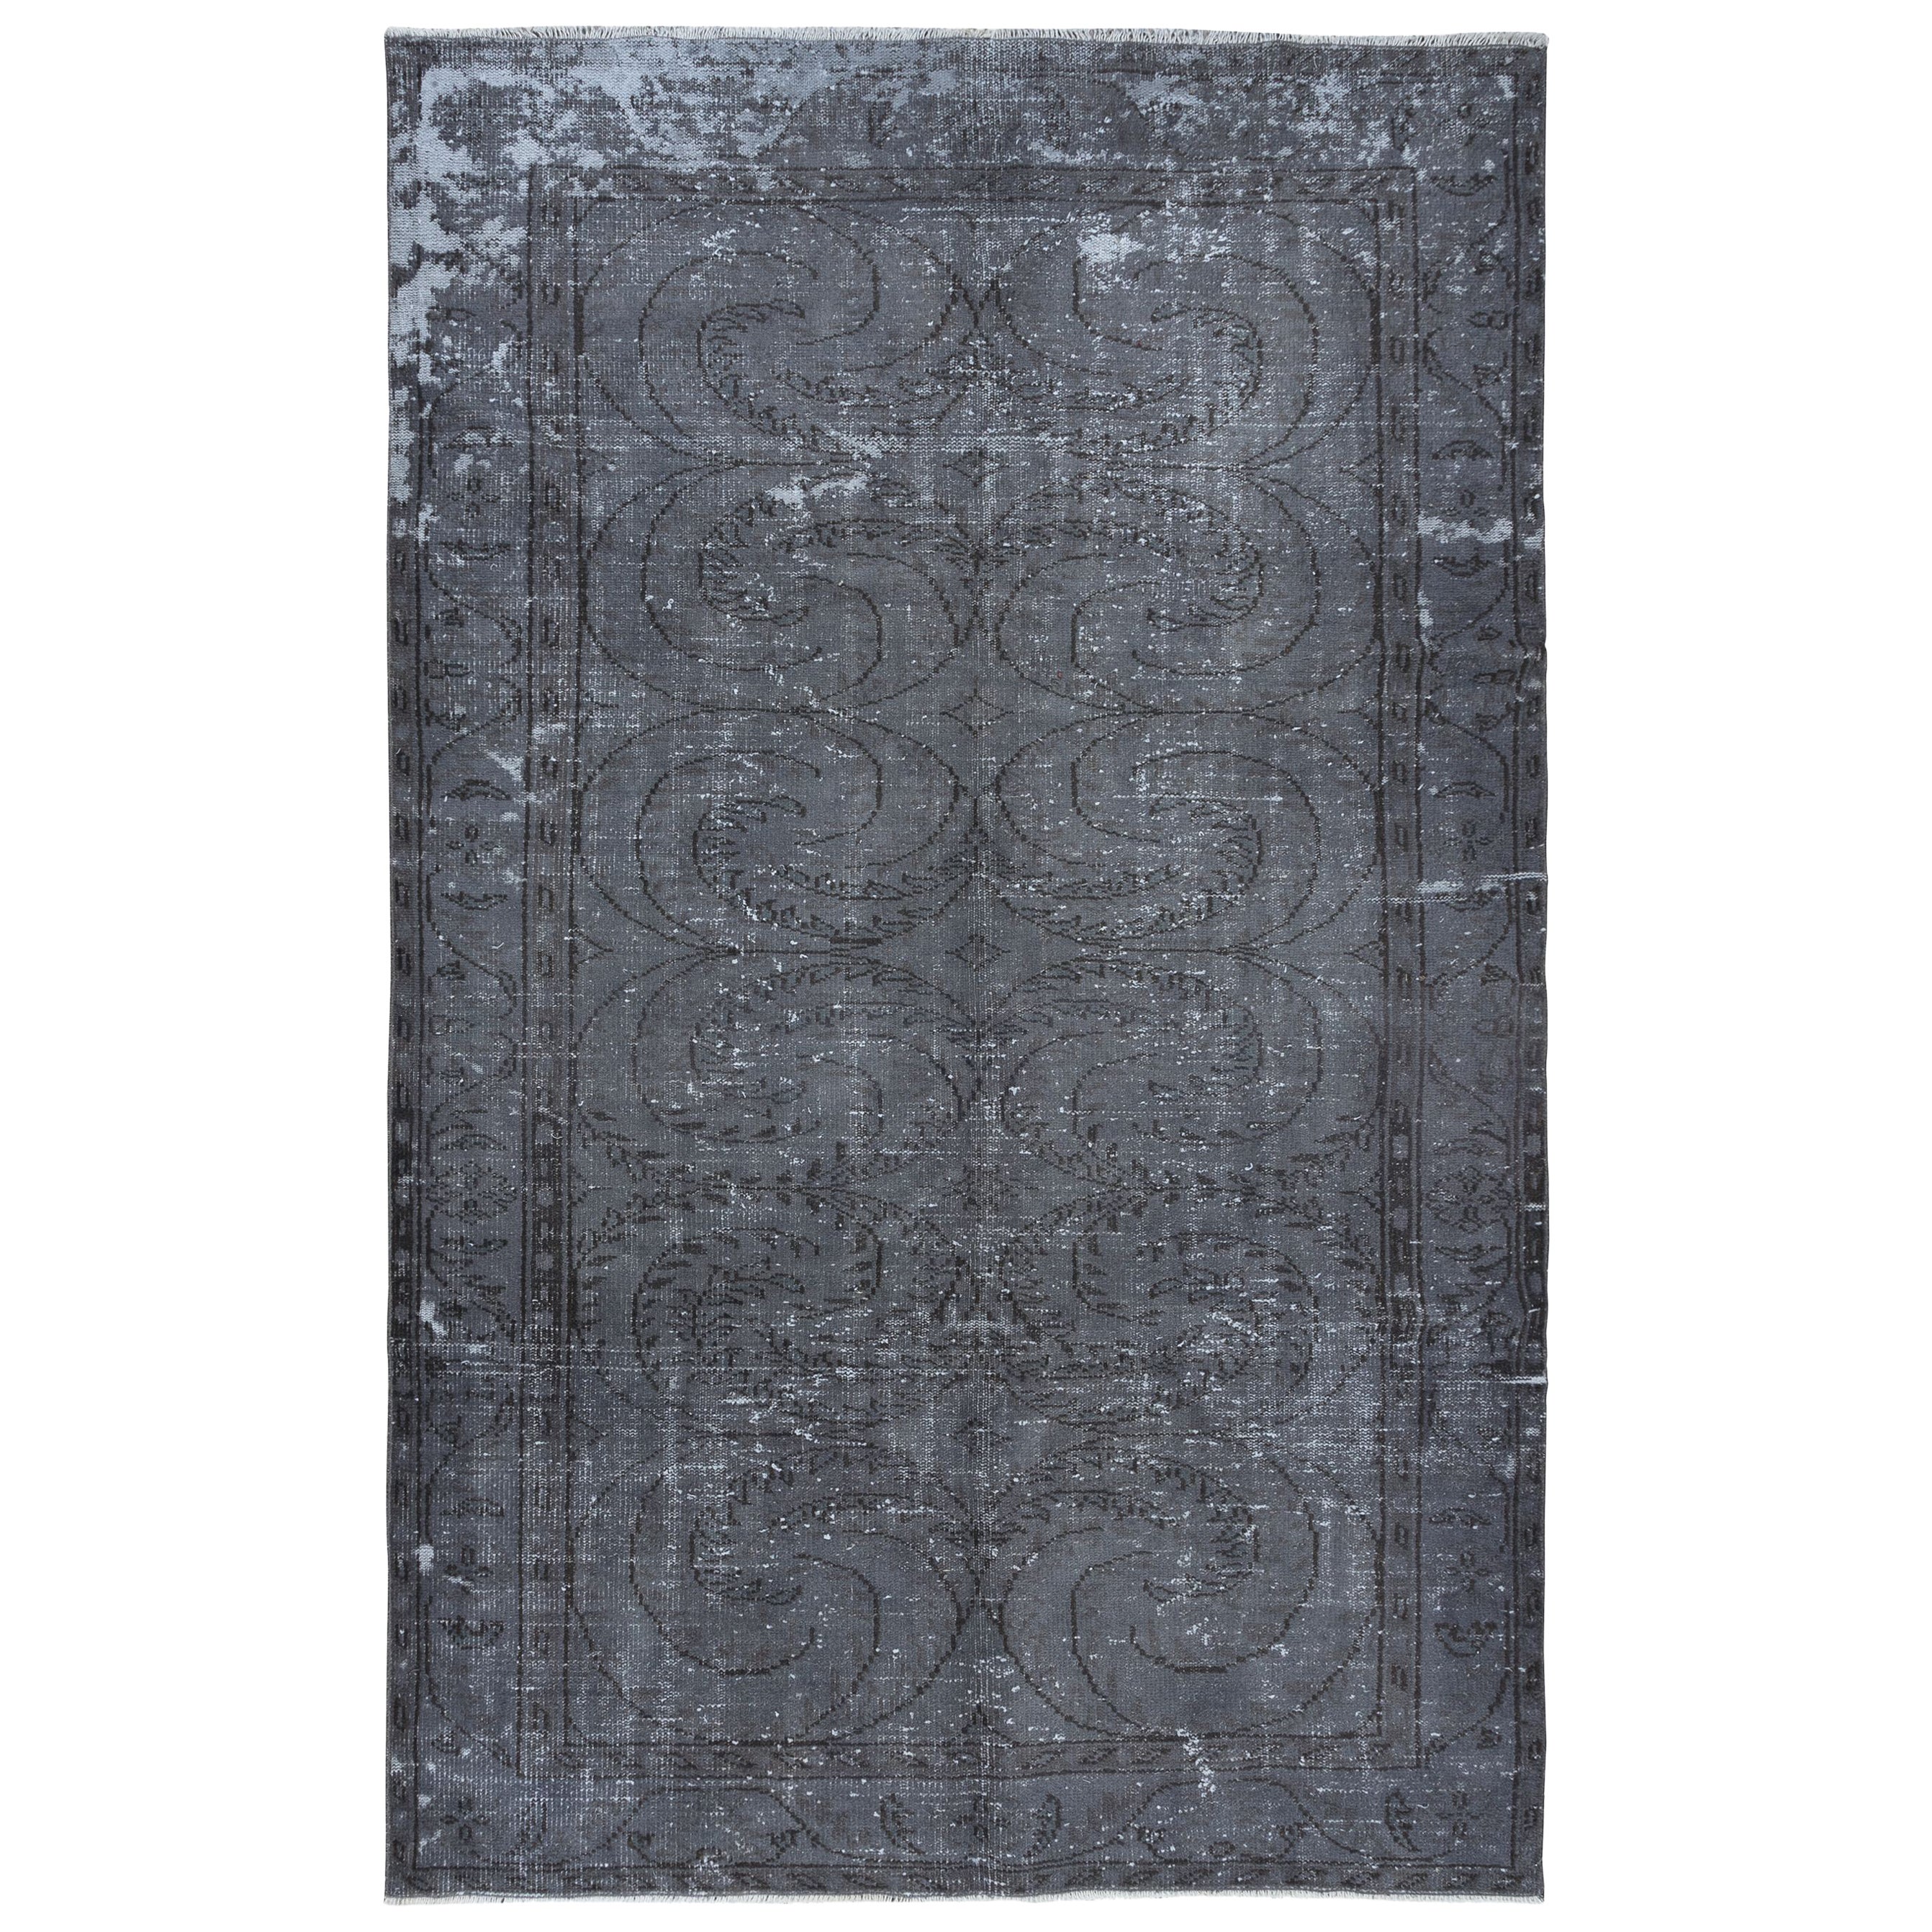 6.5x10 Ft Gray Handmade Shabby Chic Rug, Low Pile Carpet from Isparta, Turkey (Tapis à poil ras d'Isparta, Turquie)